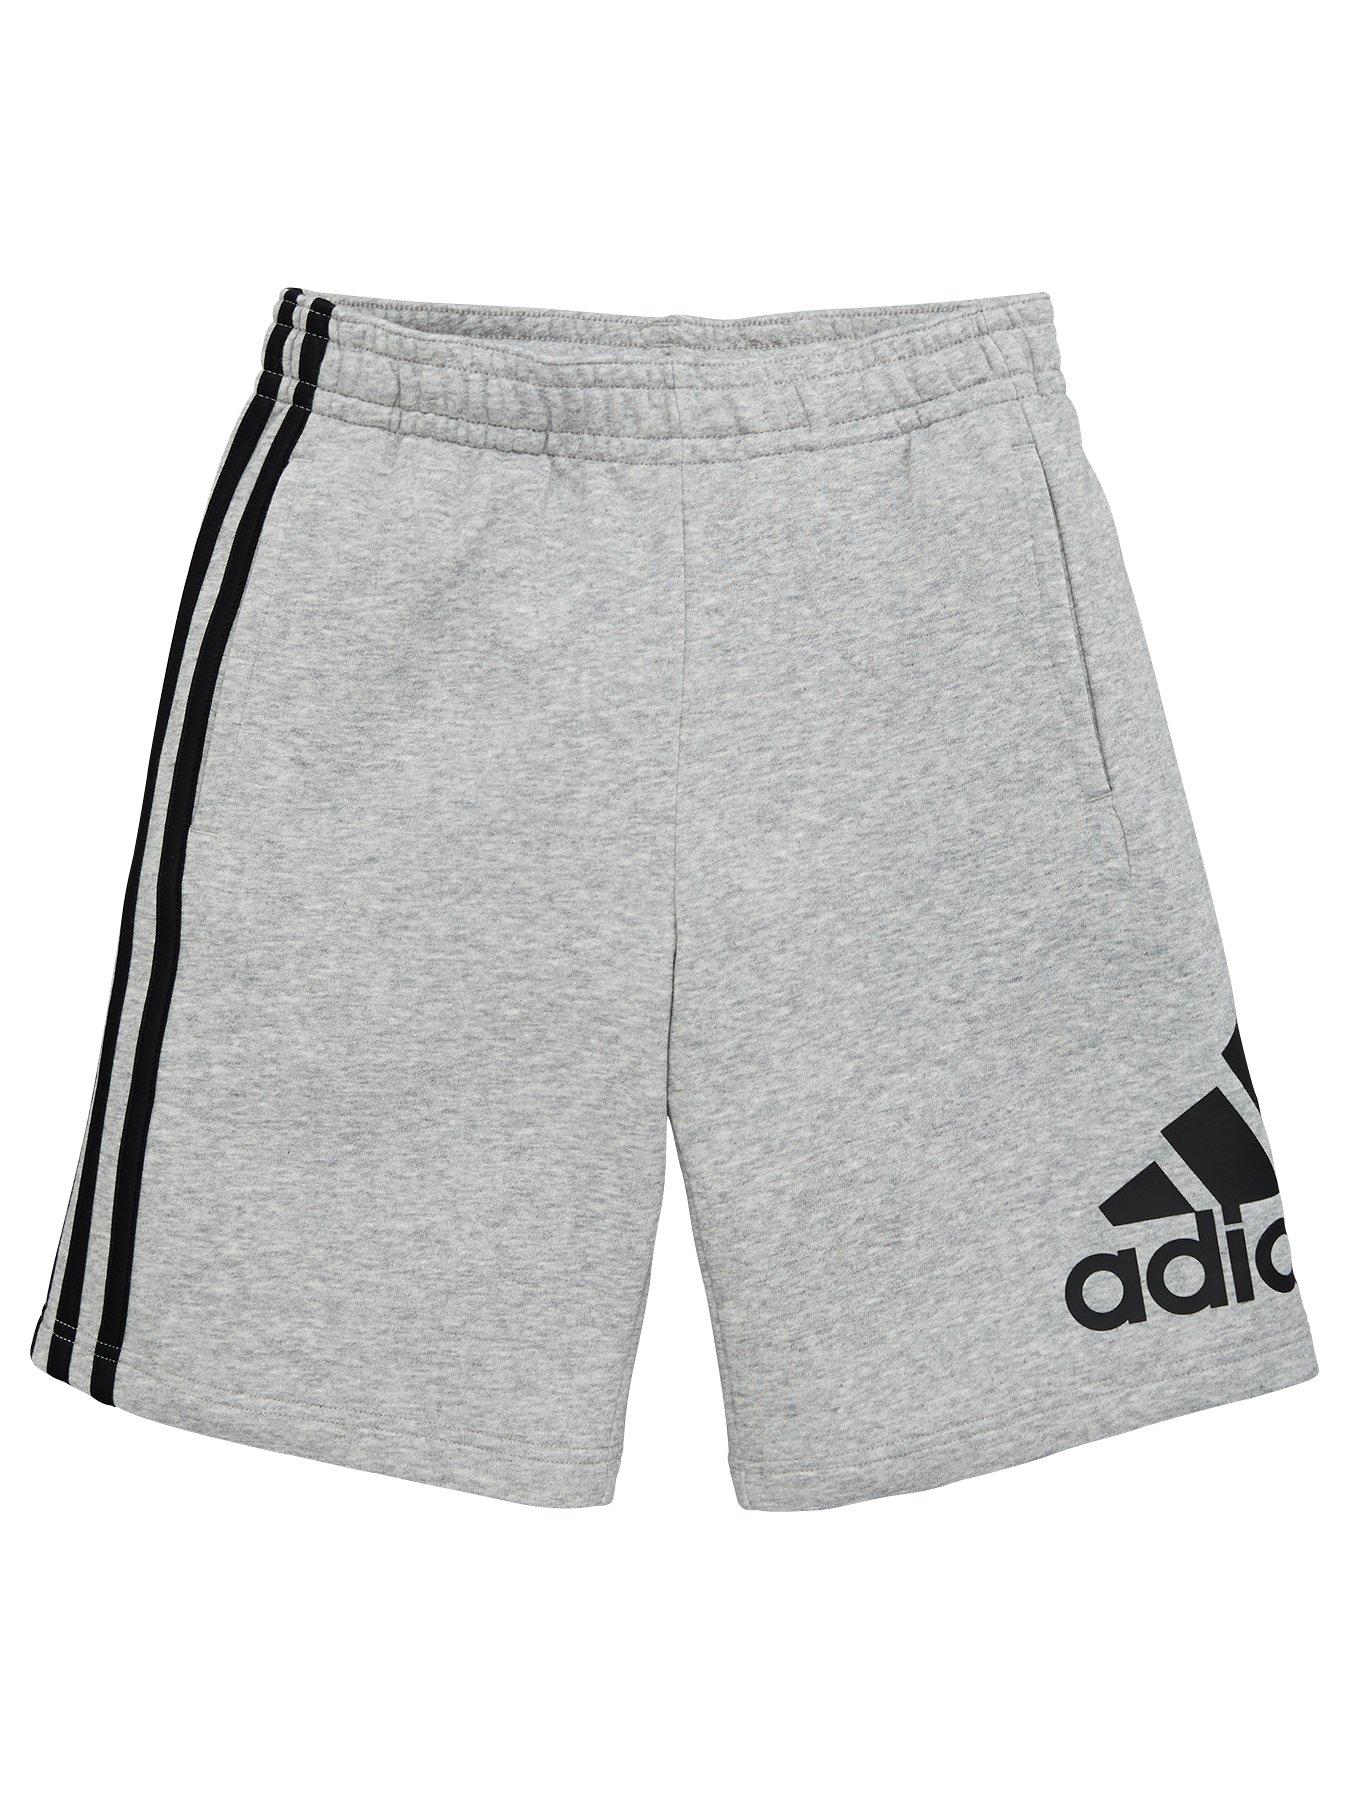 boys grey adidas shorts